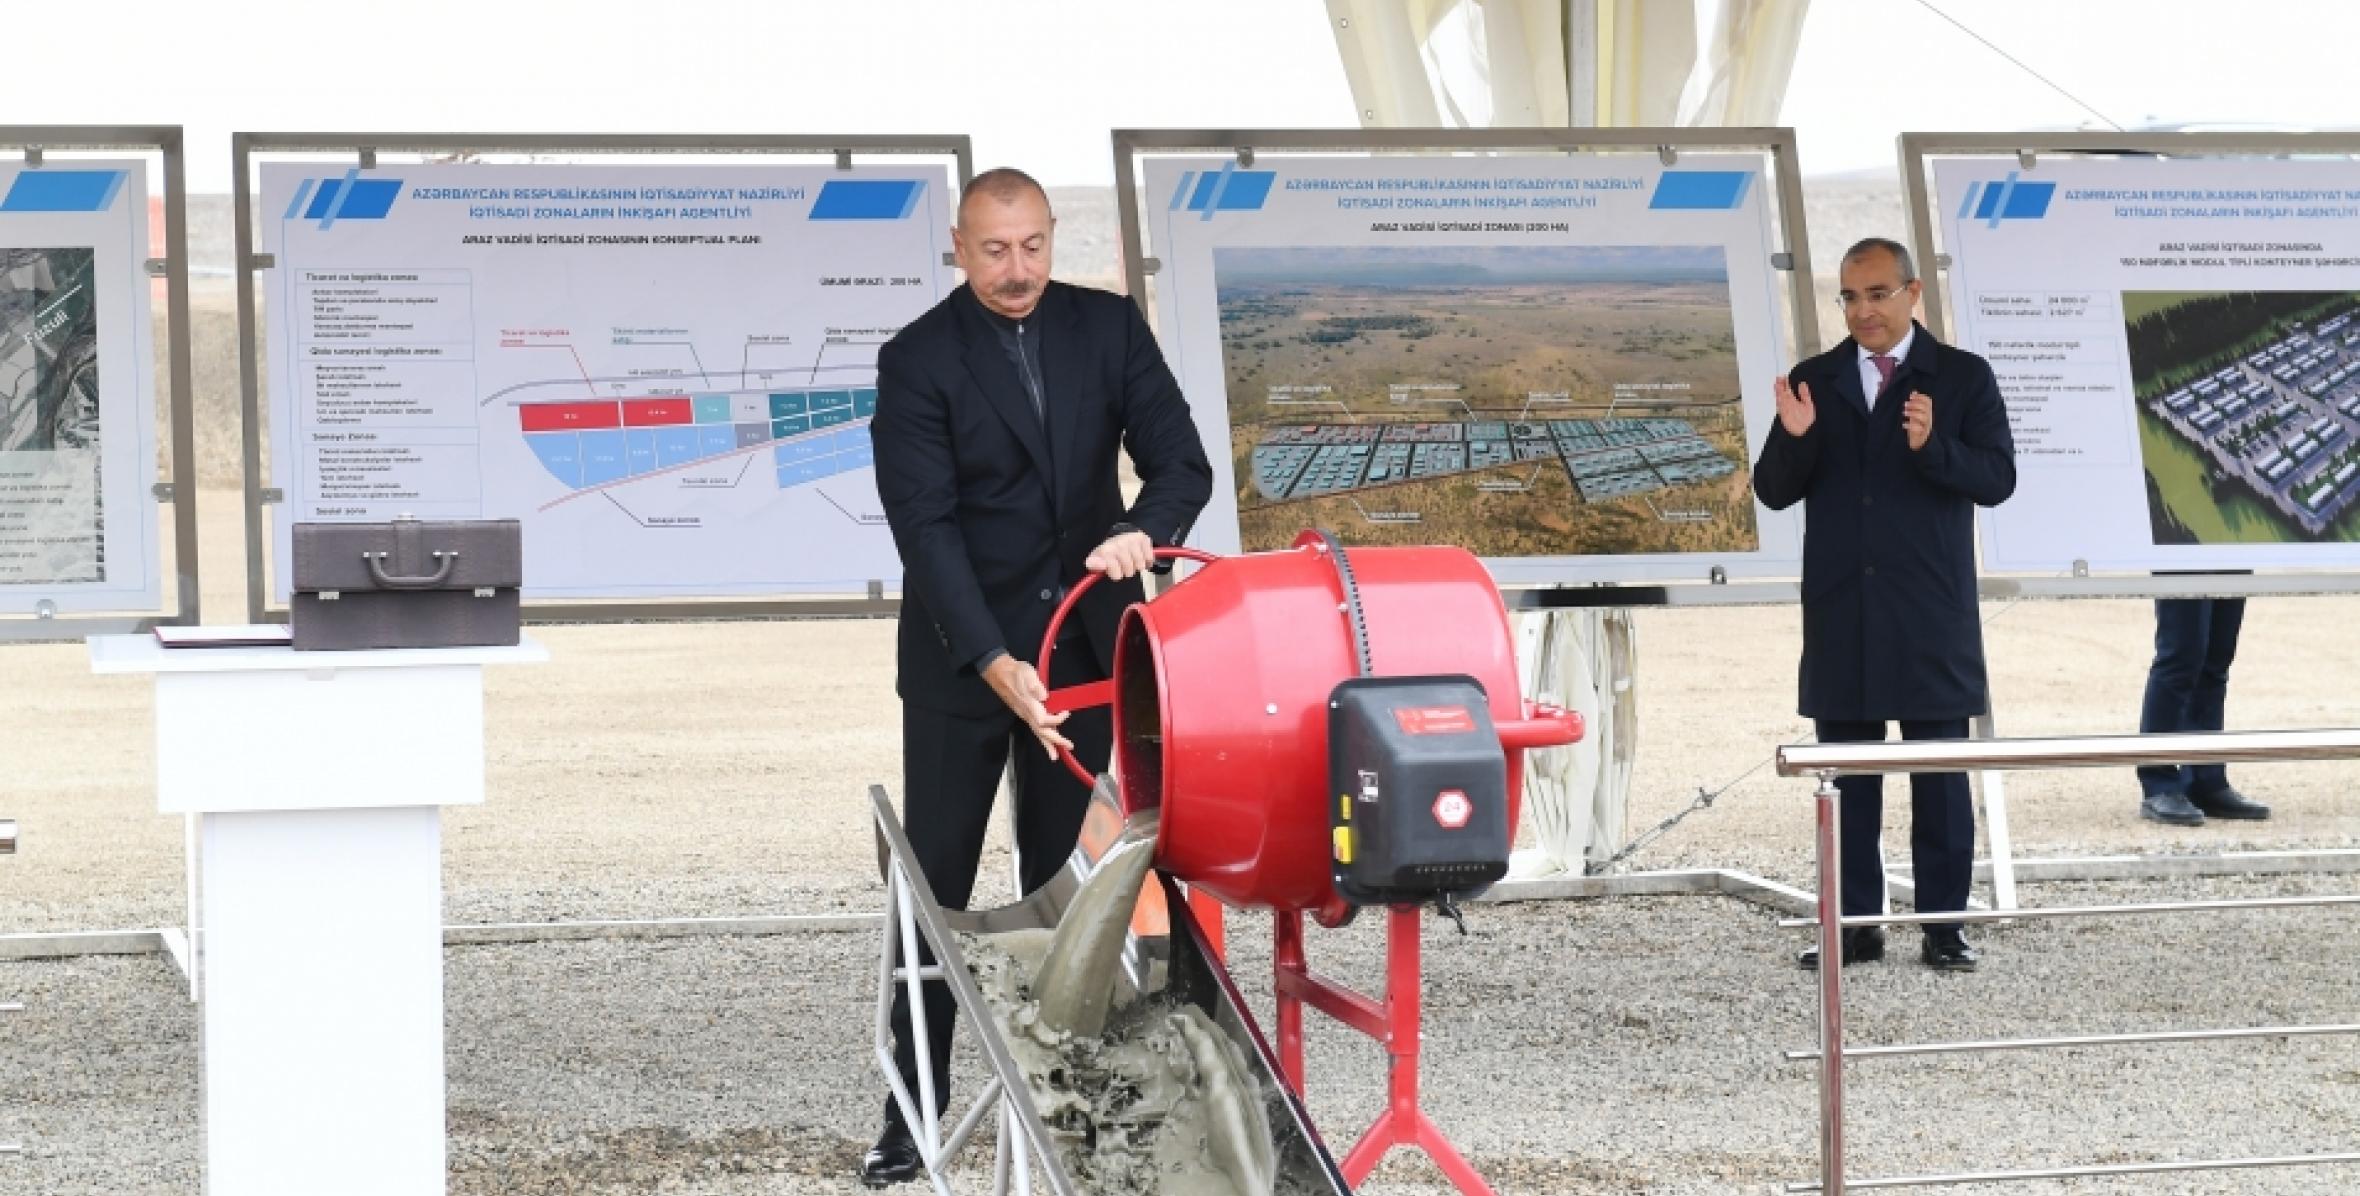 Ilham Aliyev laid foundation stone for “Araz Valley Economic Zone” Industrial Park to be established in East Zangazur economic region